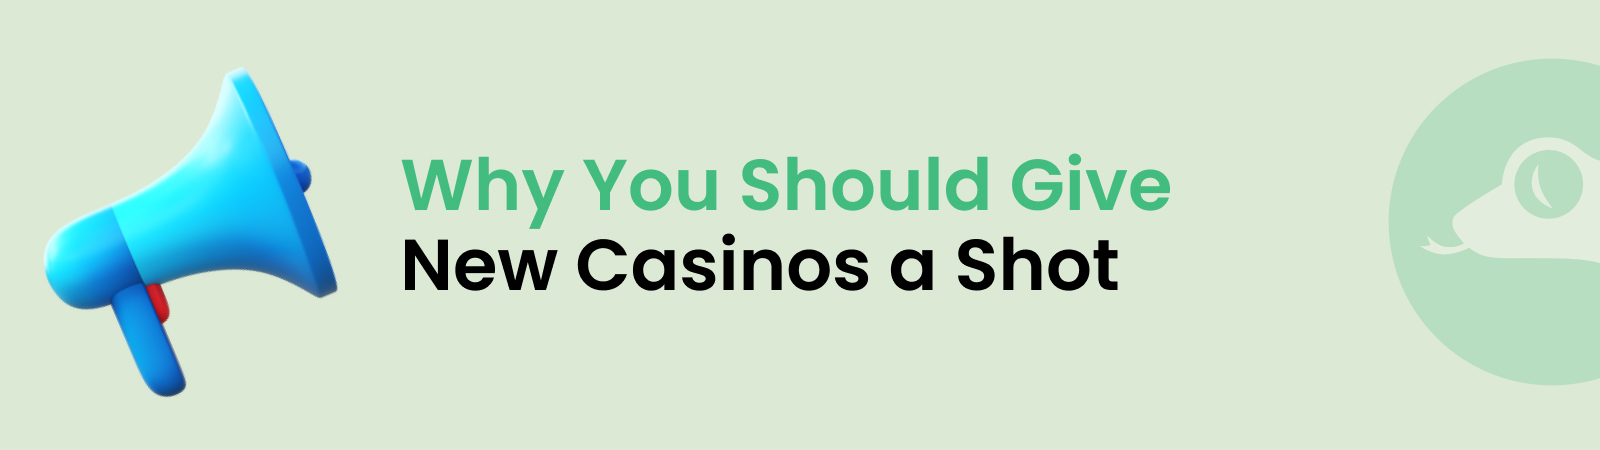 should give new UK casinos a shot